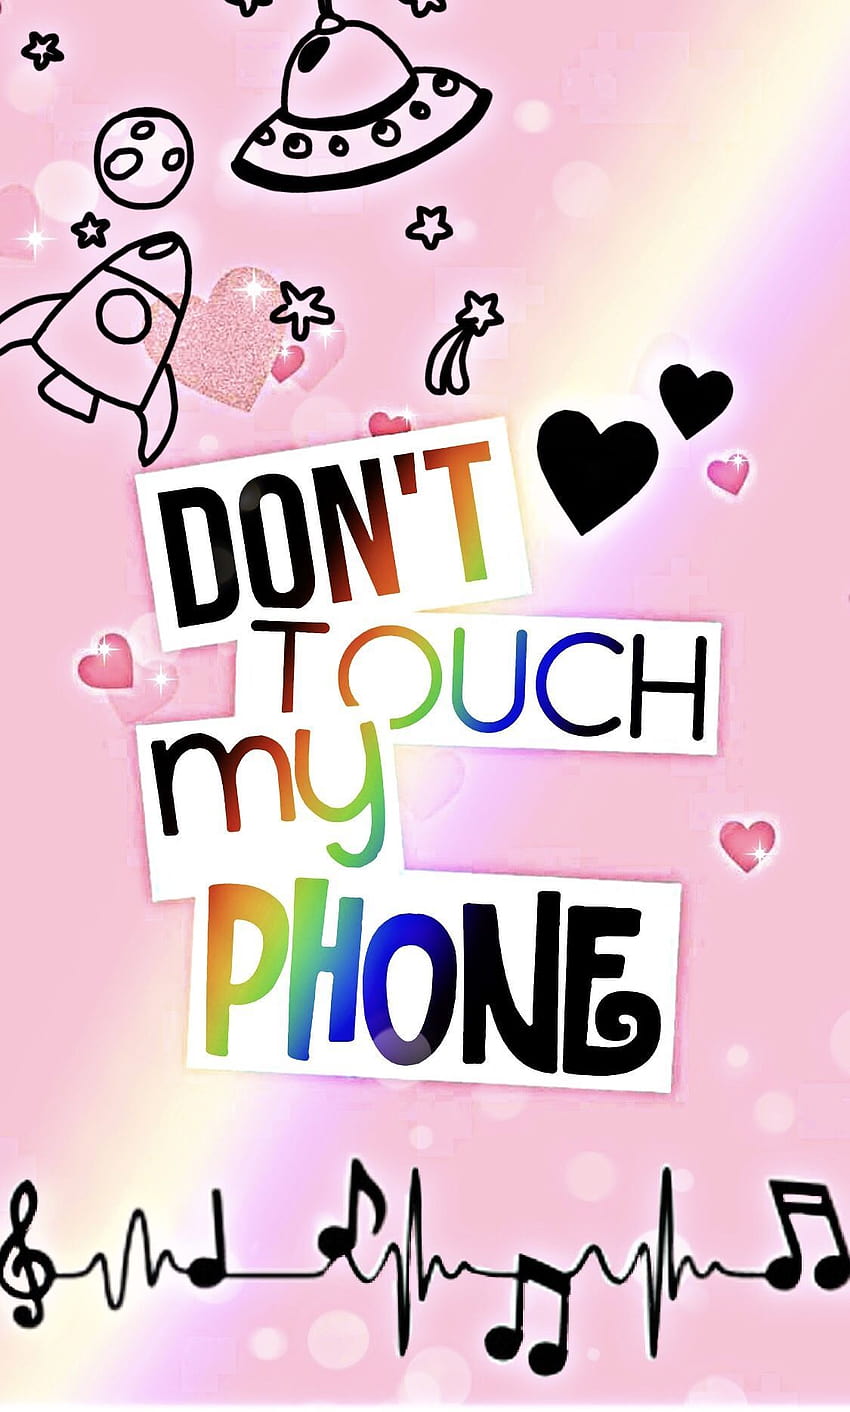 🔥 [49+] Don't Touch My Phone Wallpaper | WallpaperSafari